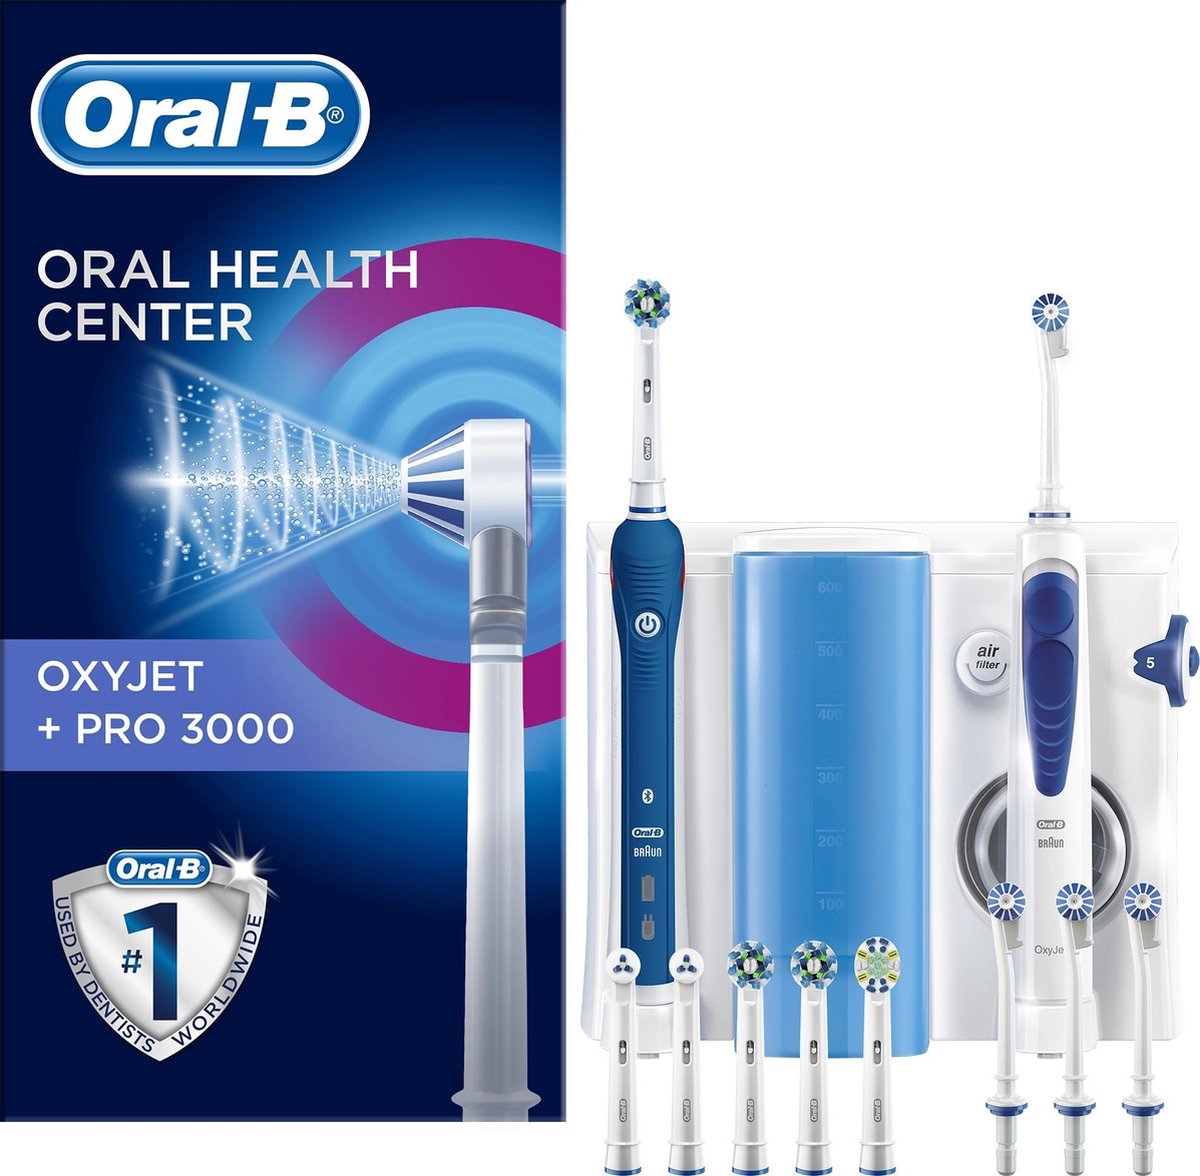 Oral-B OxyJet Reinigingssysteem Flosapparaat + Oral-B PRO 3000 -  Elektrische Tandenborstel | bol.com